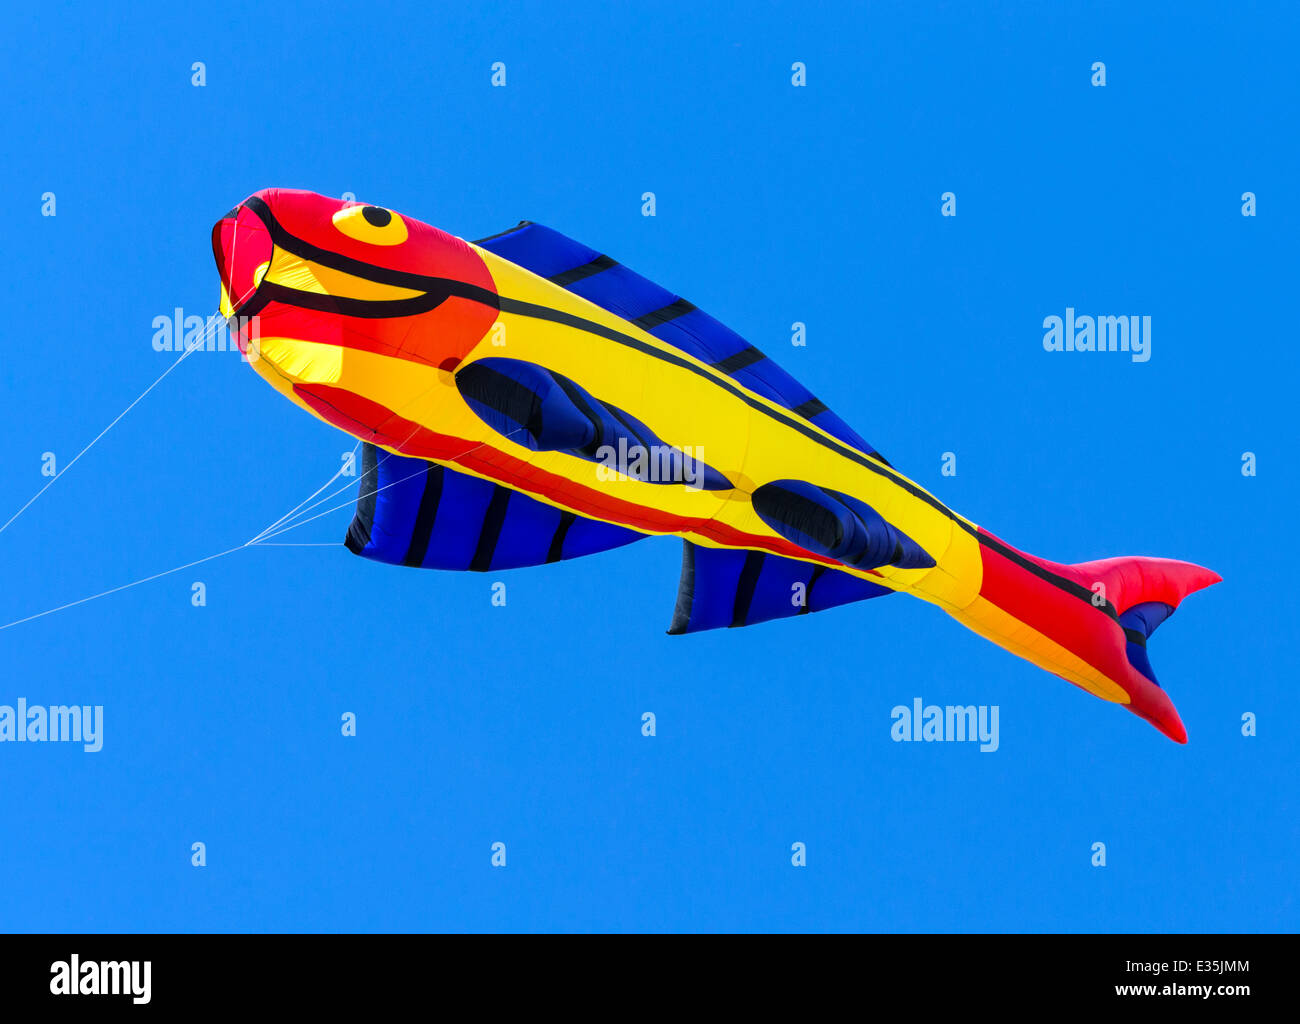 Fish shaped kite flying against cobalt blue Colorado sky Stock Photo